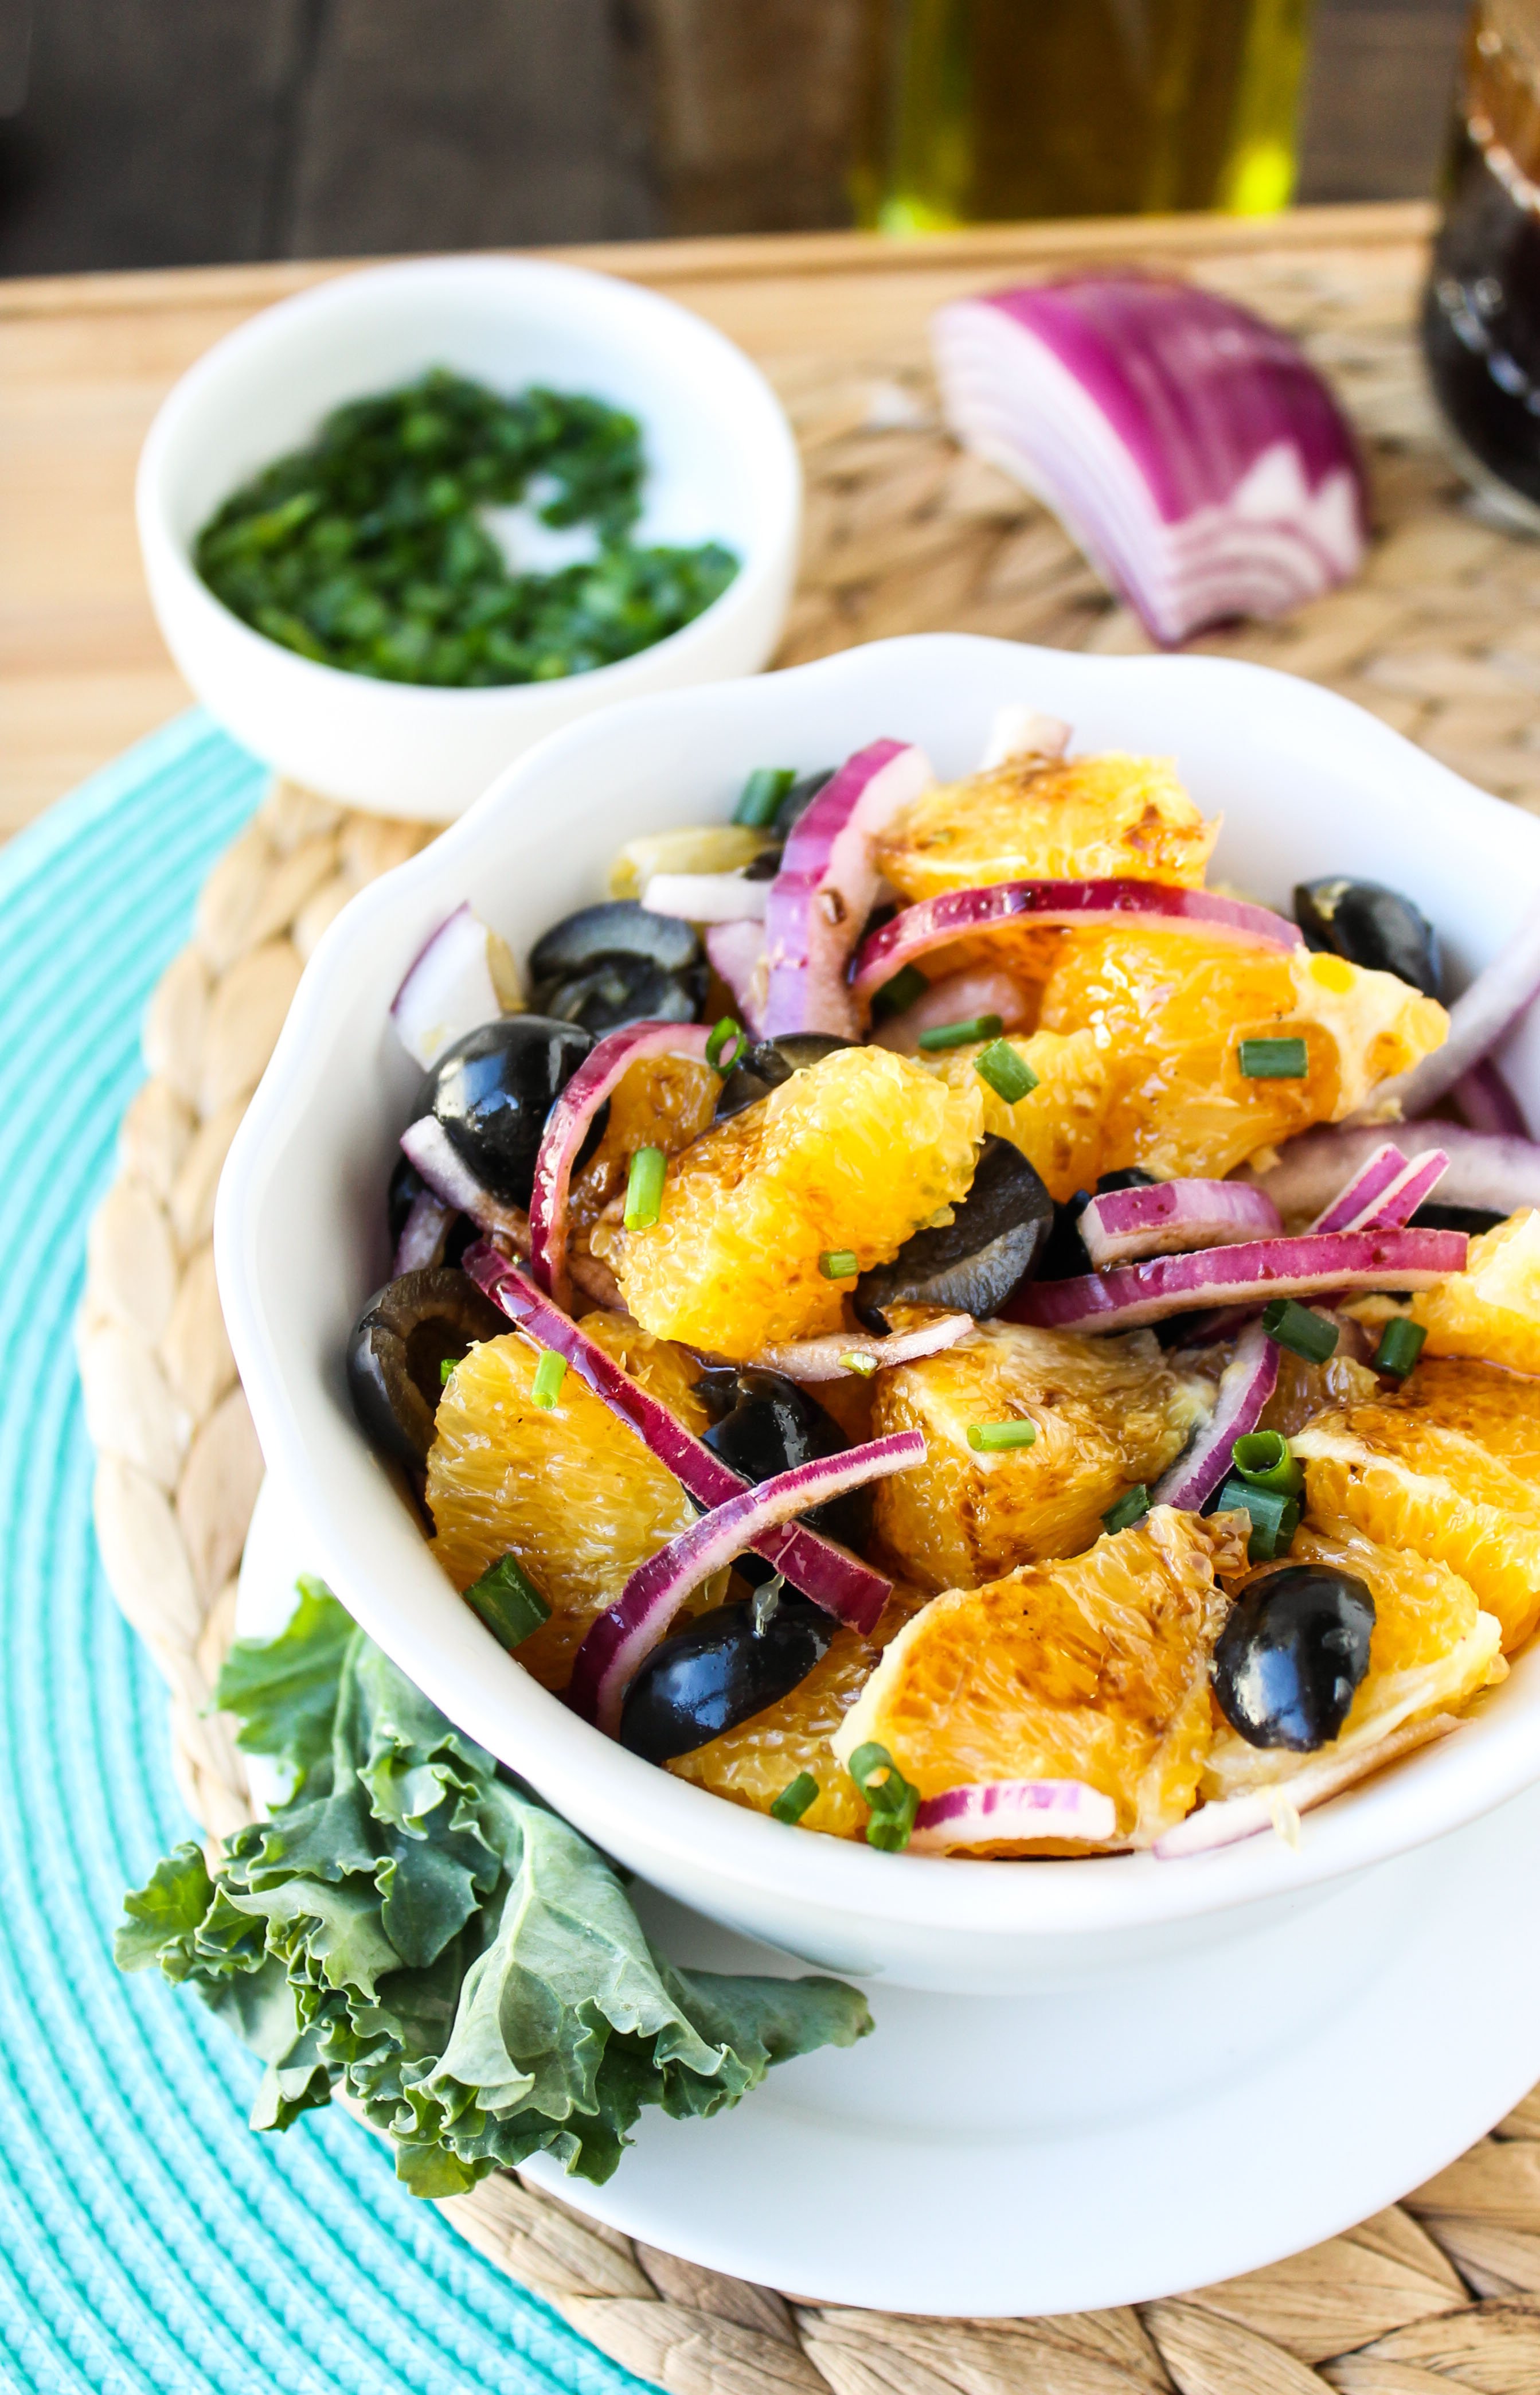 Orange Olive Salad with Balsamic Vinaigrette - The Food Charlatan